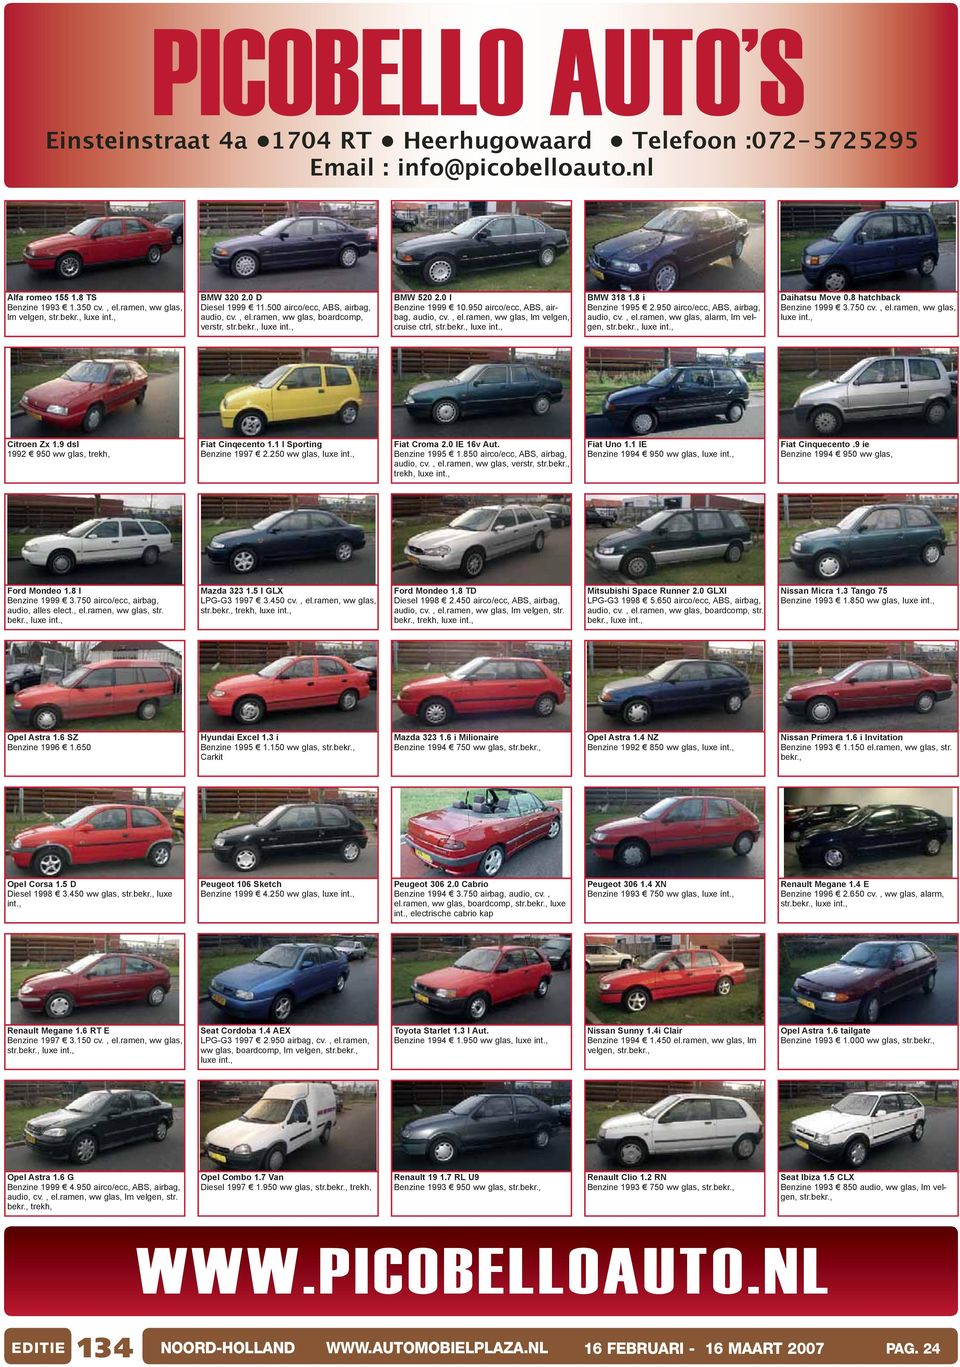 8 i Benzine 1995 2.950 airco/ecc, ABS, airbag, lm velgen, str. Daihatsu Move 0.8 hatchback Benzine 1999 3.750 cv., el.ramen, ww glas, Citroen Zx 1.9 dsl 1992 950 ww glas, trekh, Fiat Cinqecento 1.